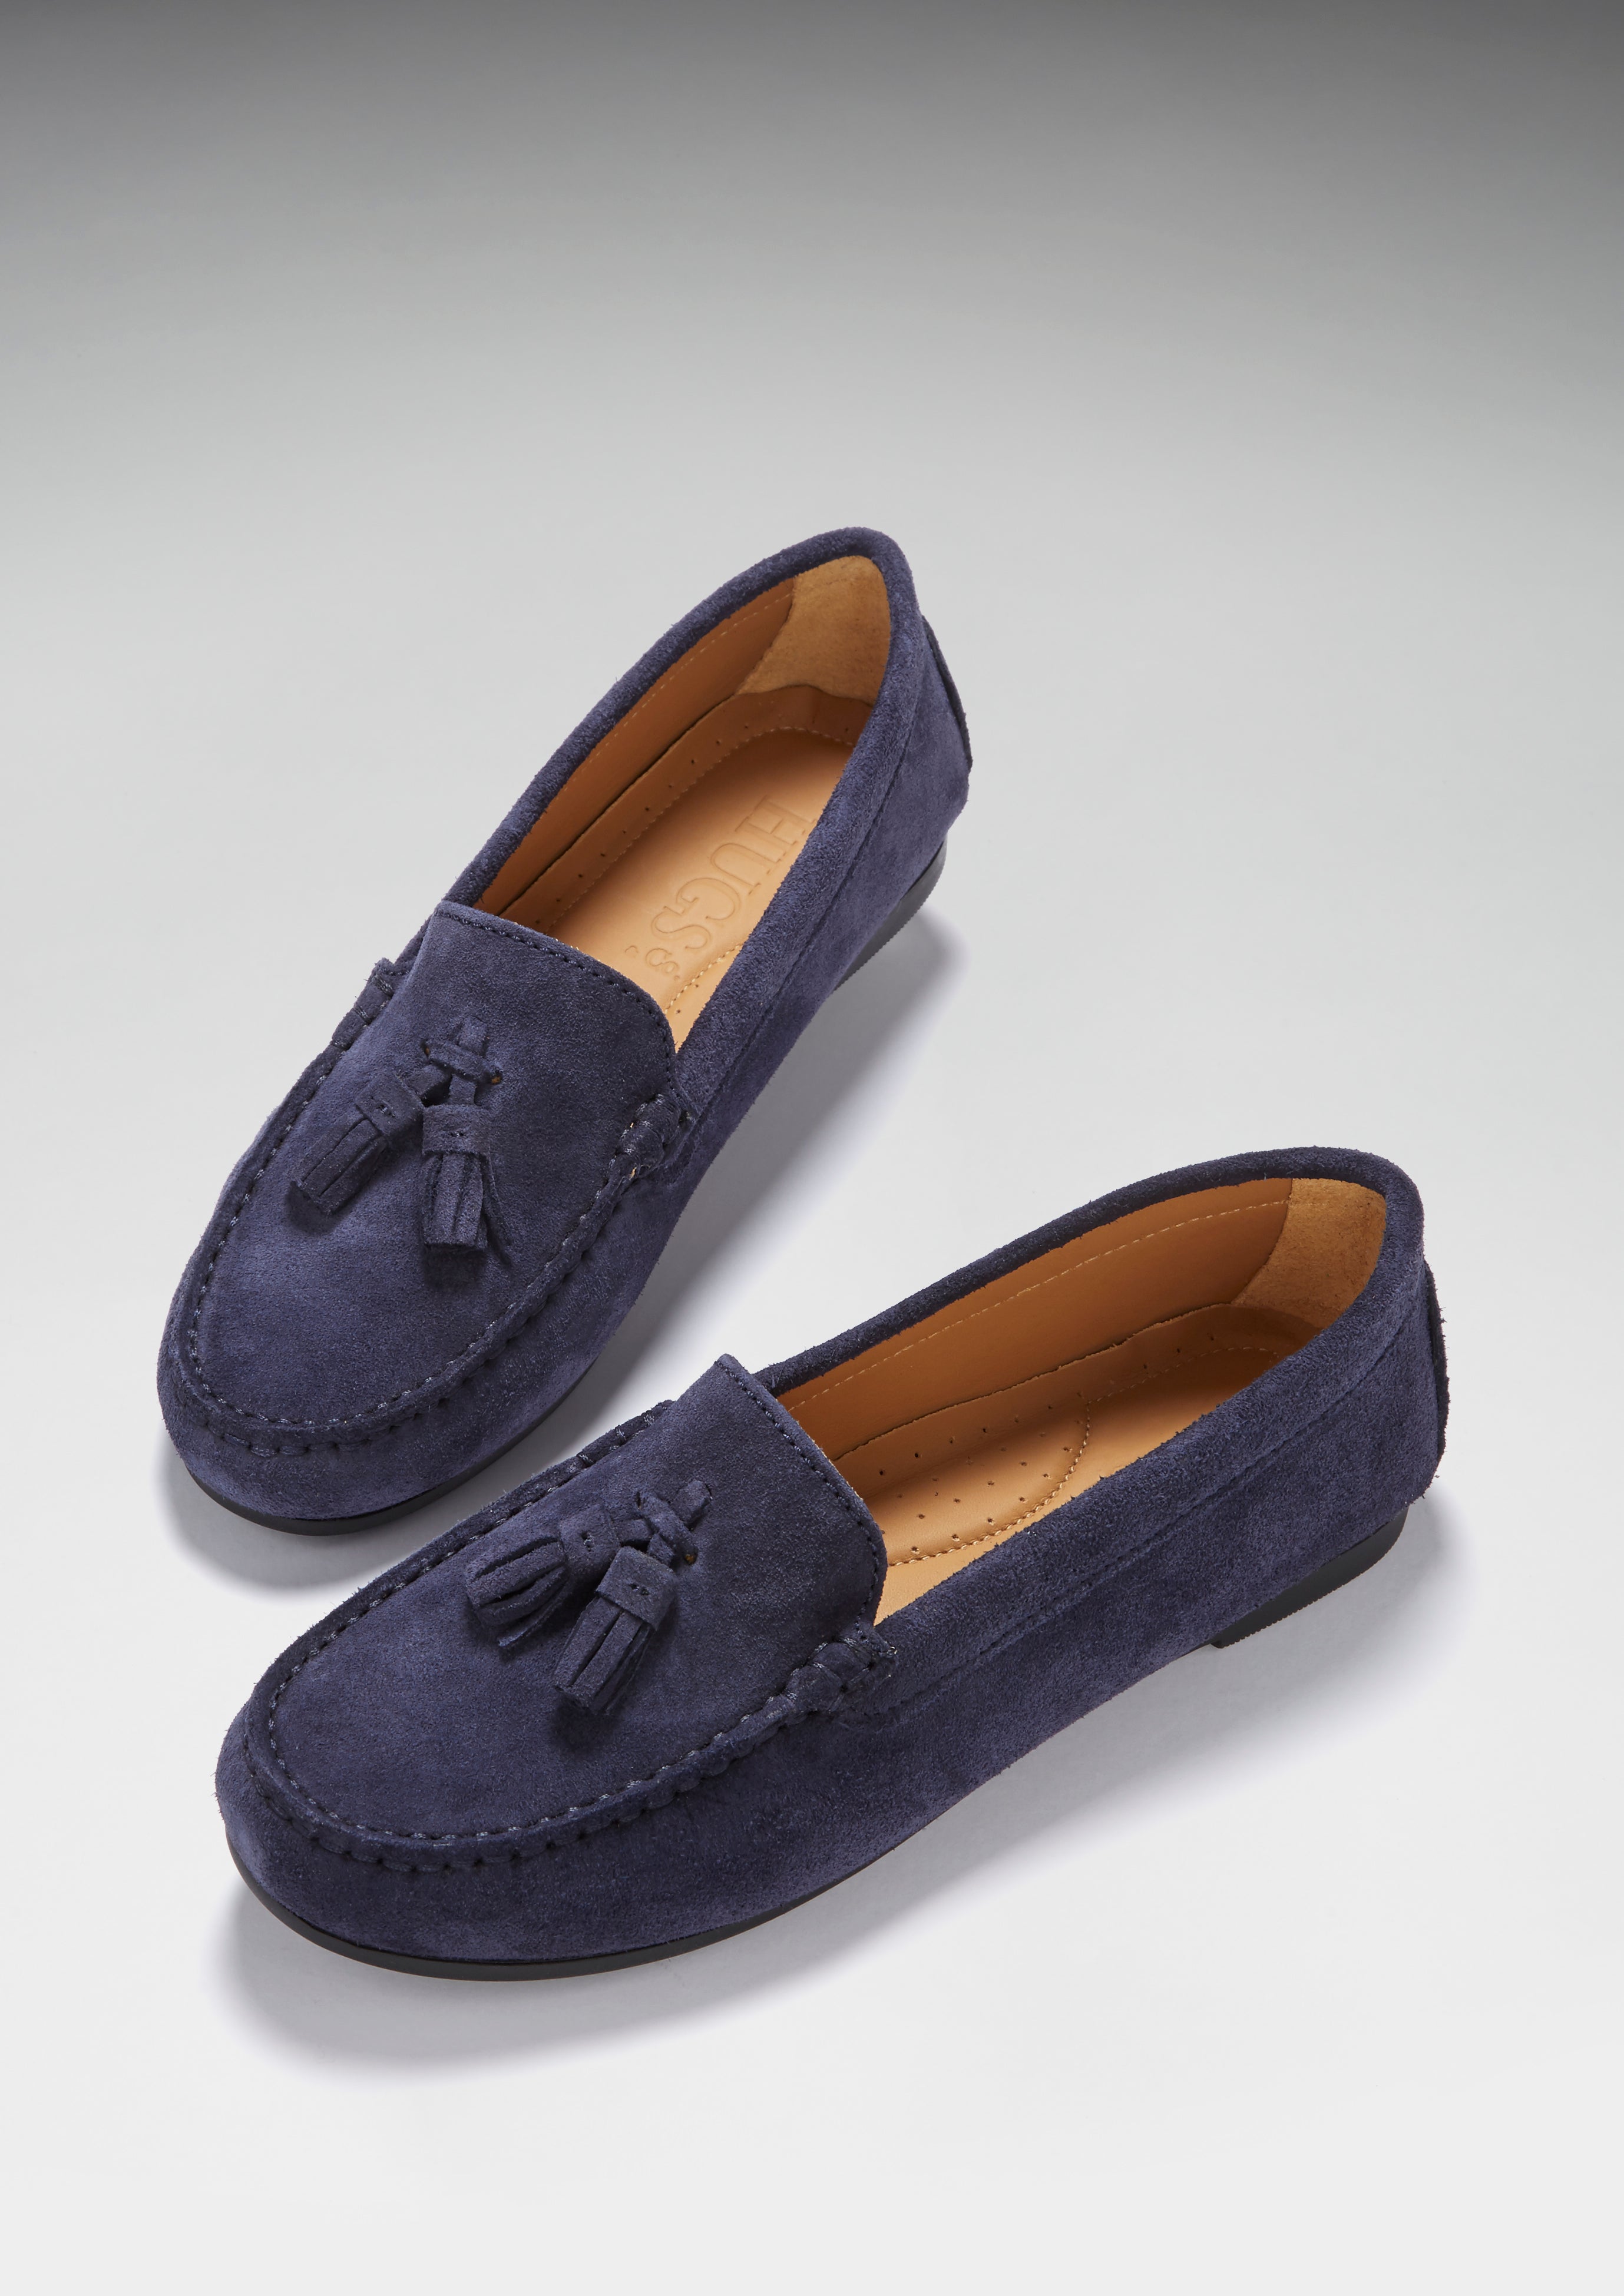 Women's Tasselled Driving Loafers Full Rubber Sole, navy blue suede Hugs   Co.